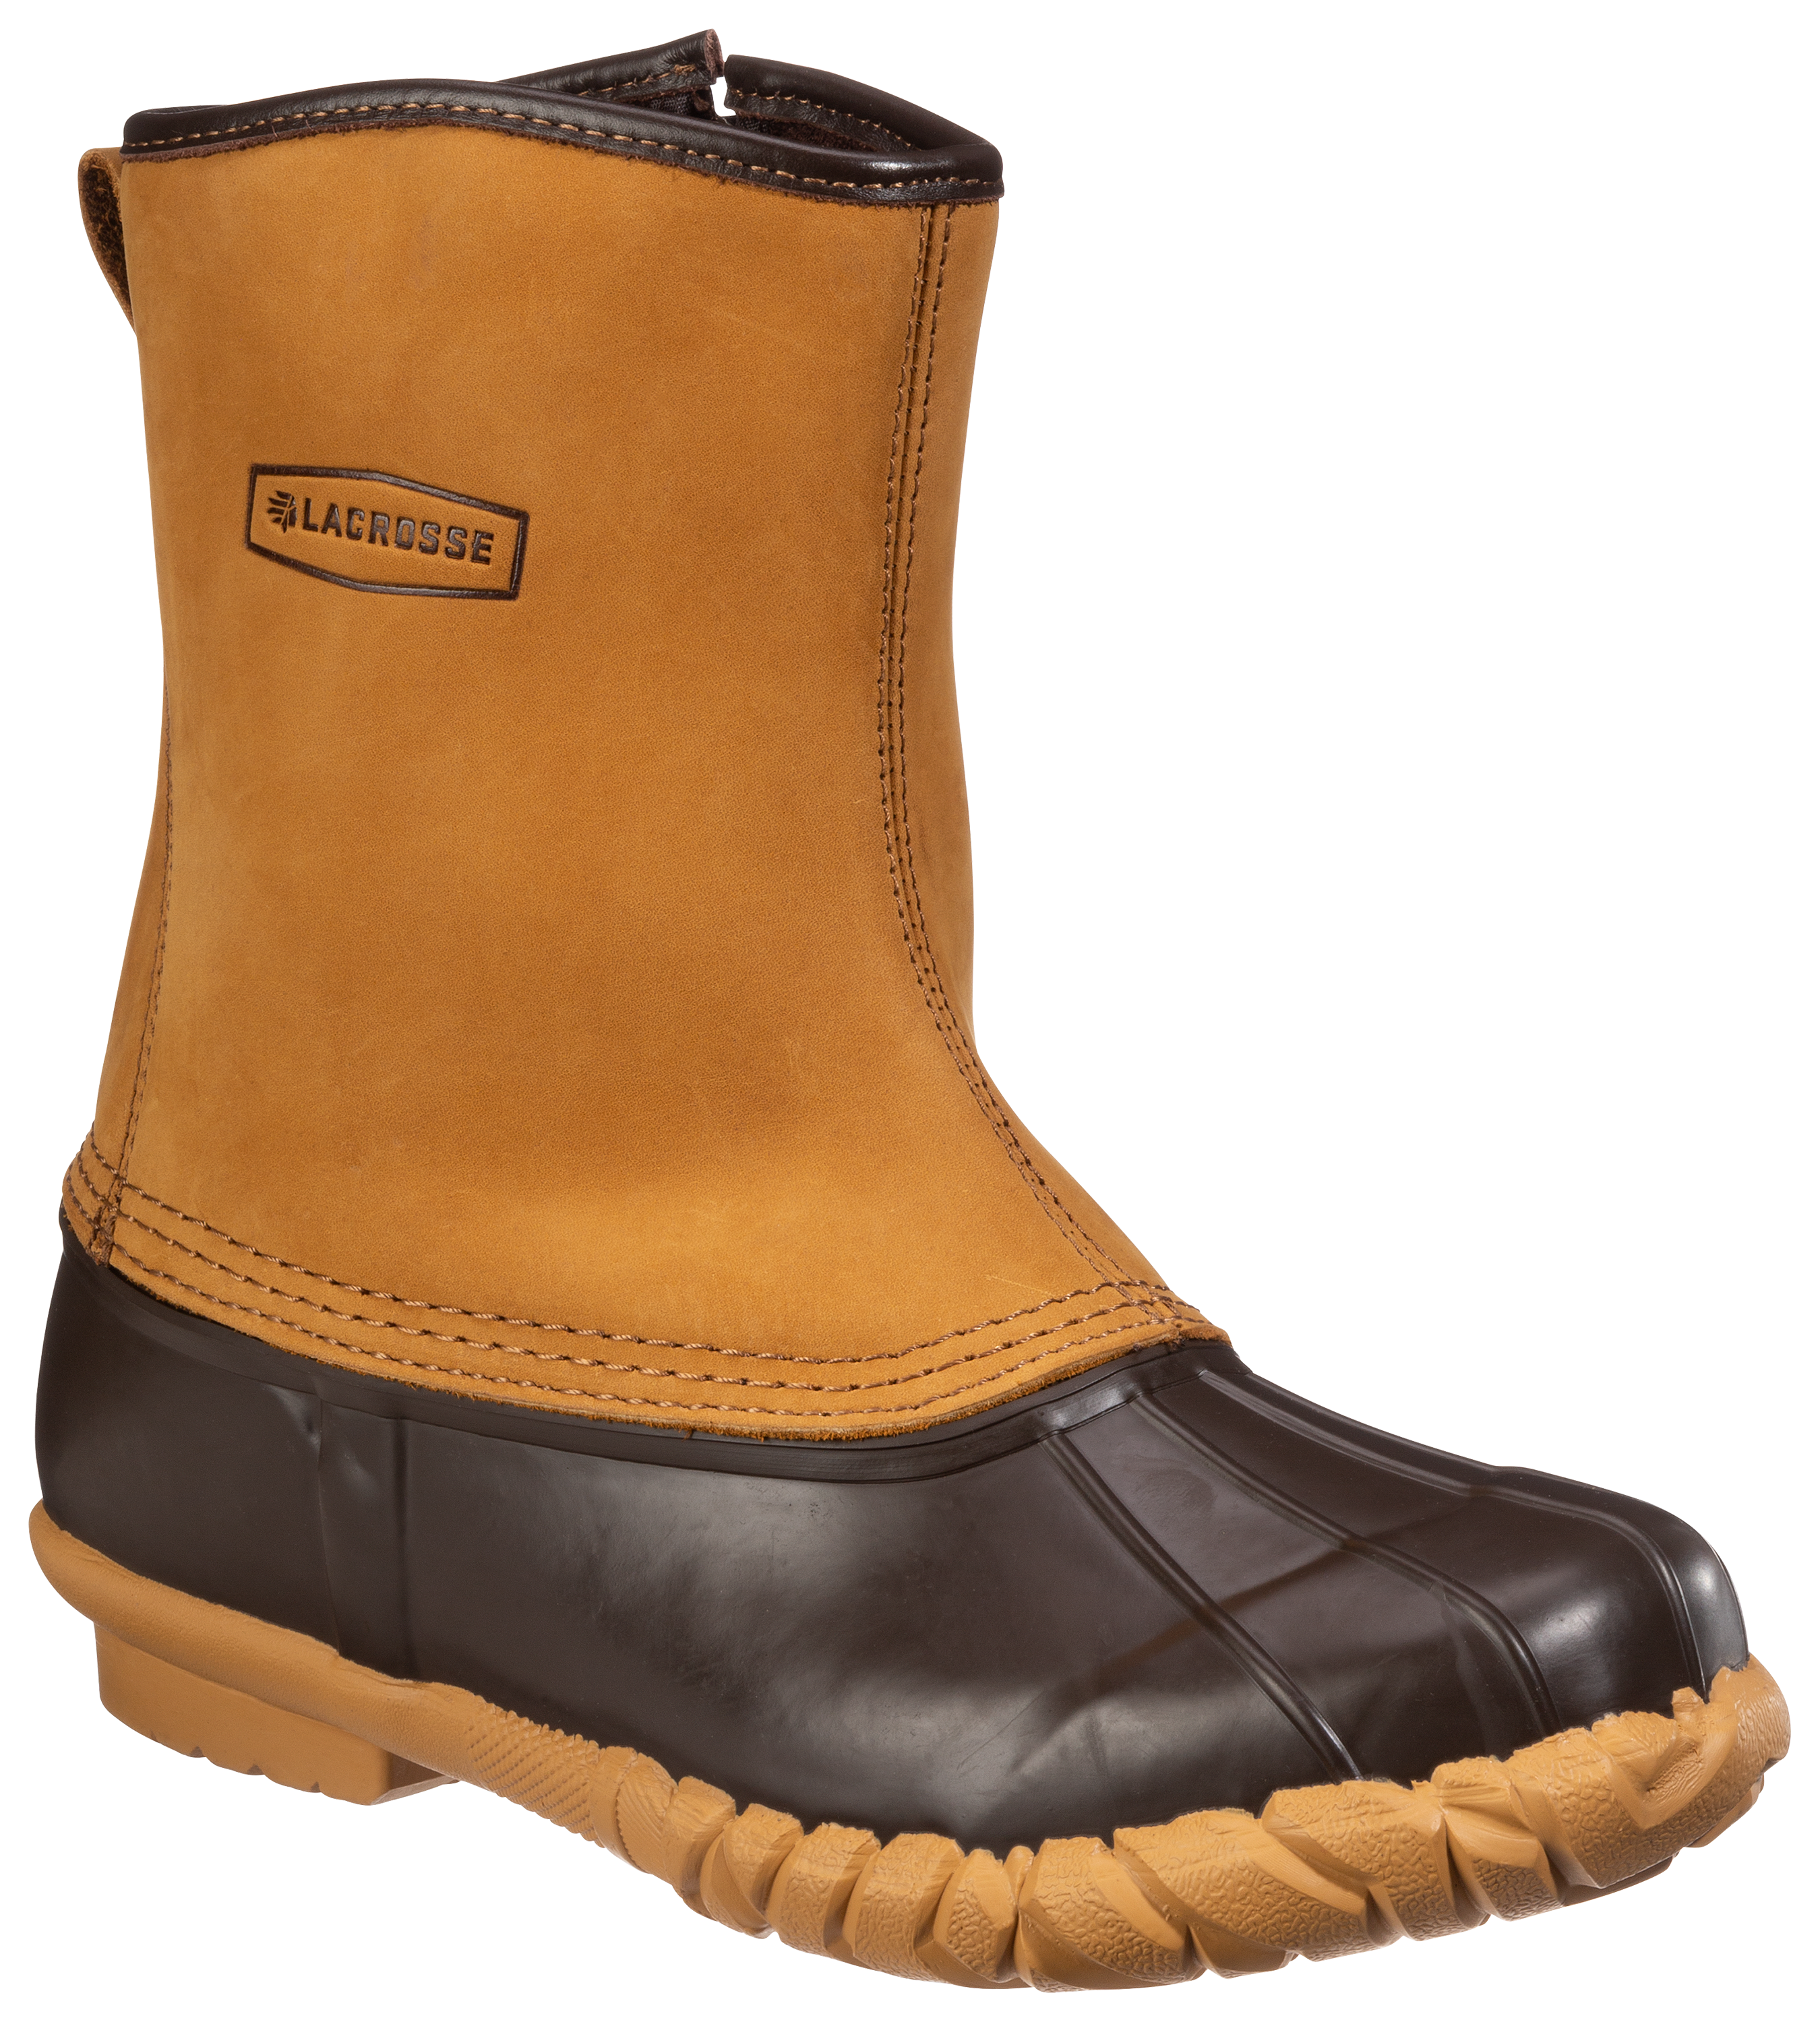 LaCrosse Mesquite II Insulated Waterproof Side-Zip Boots for Men - Brown - 13M